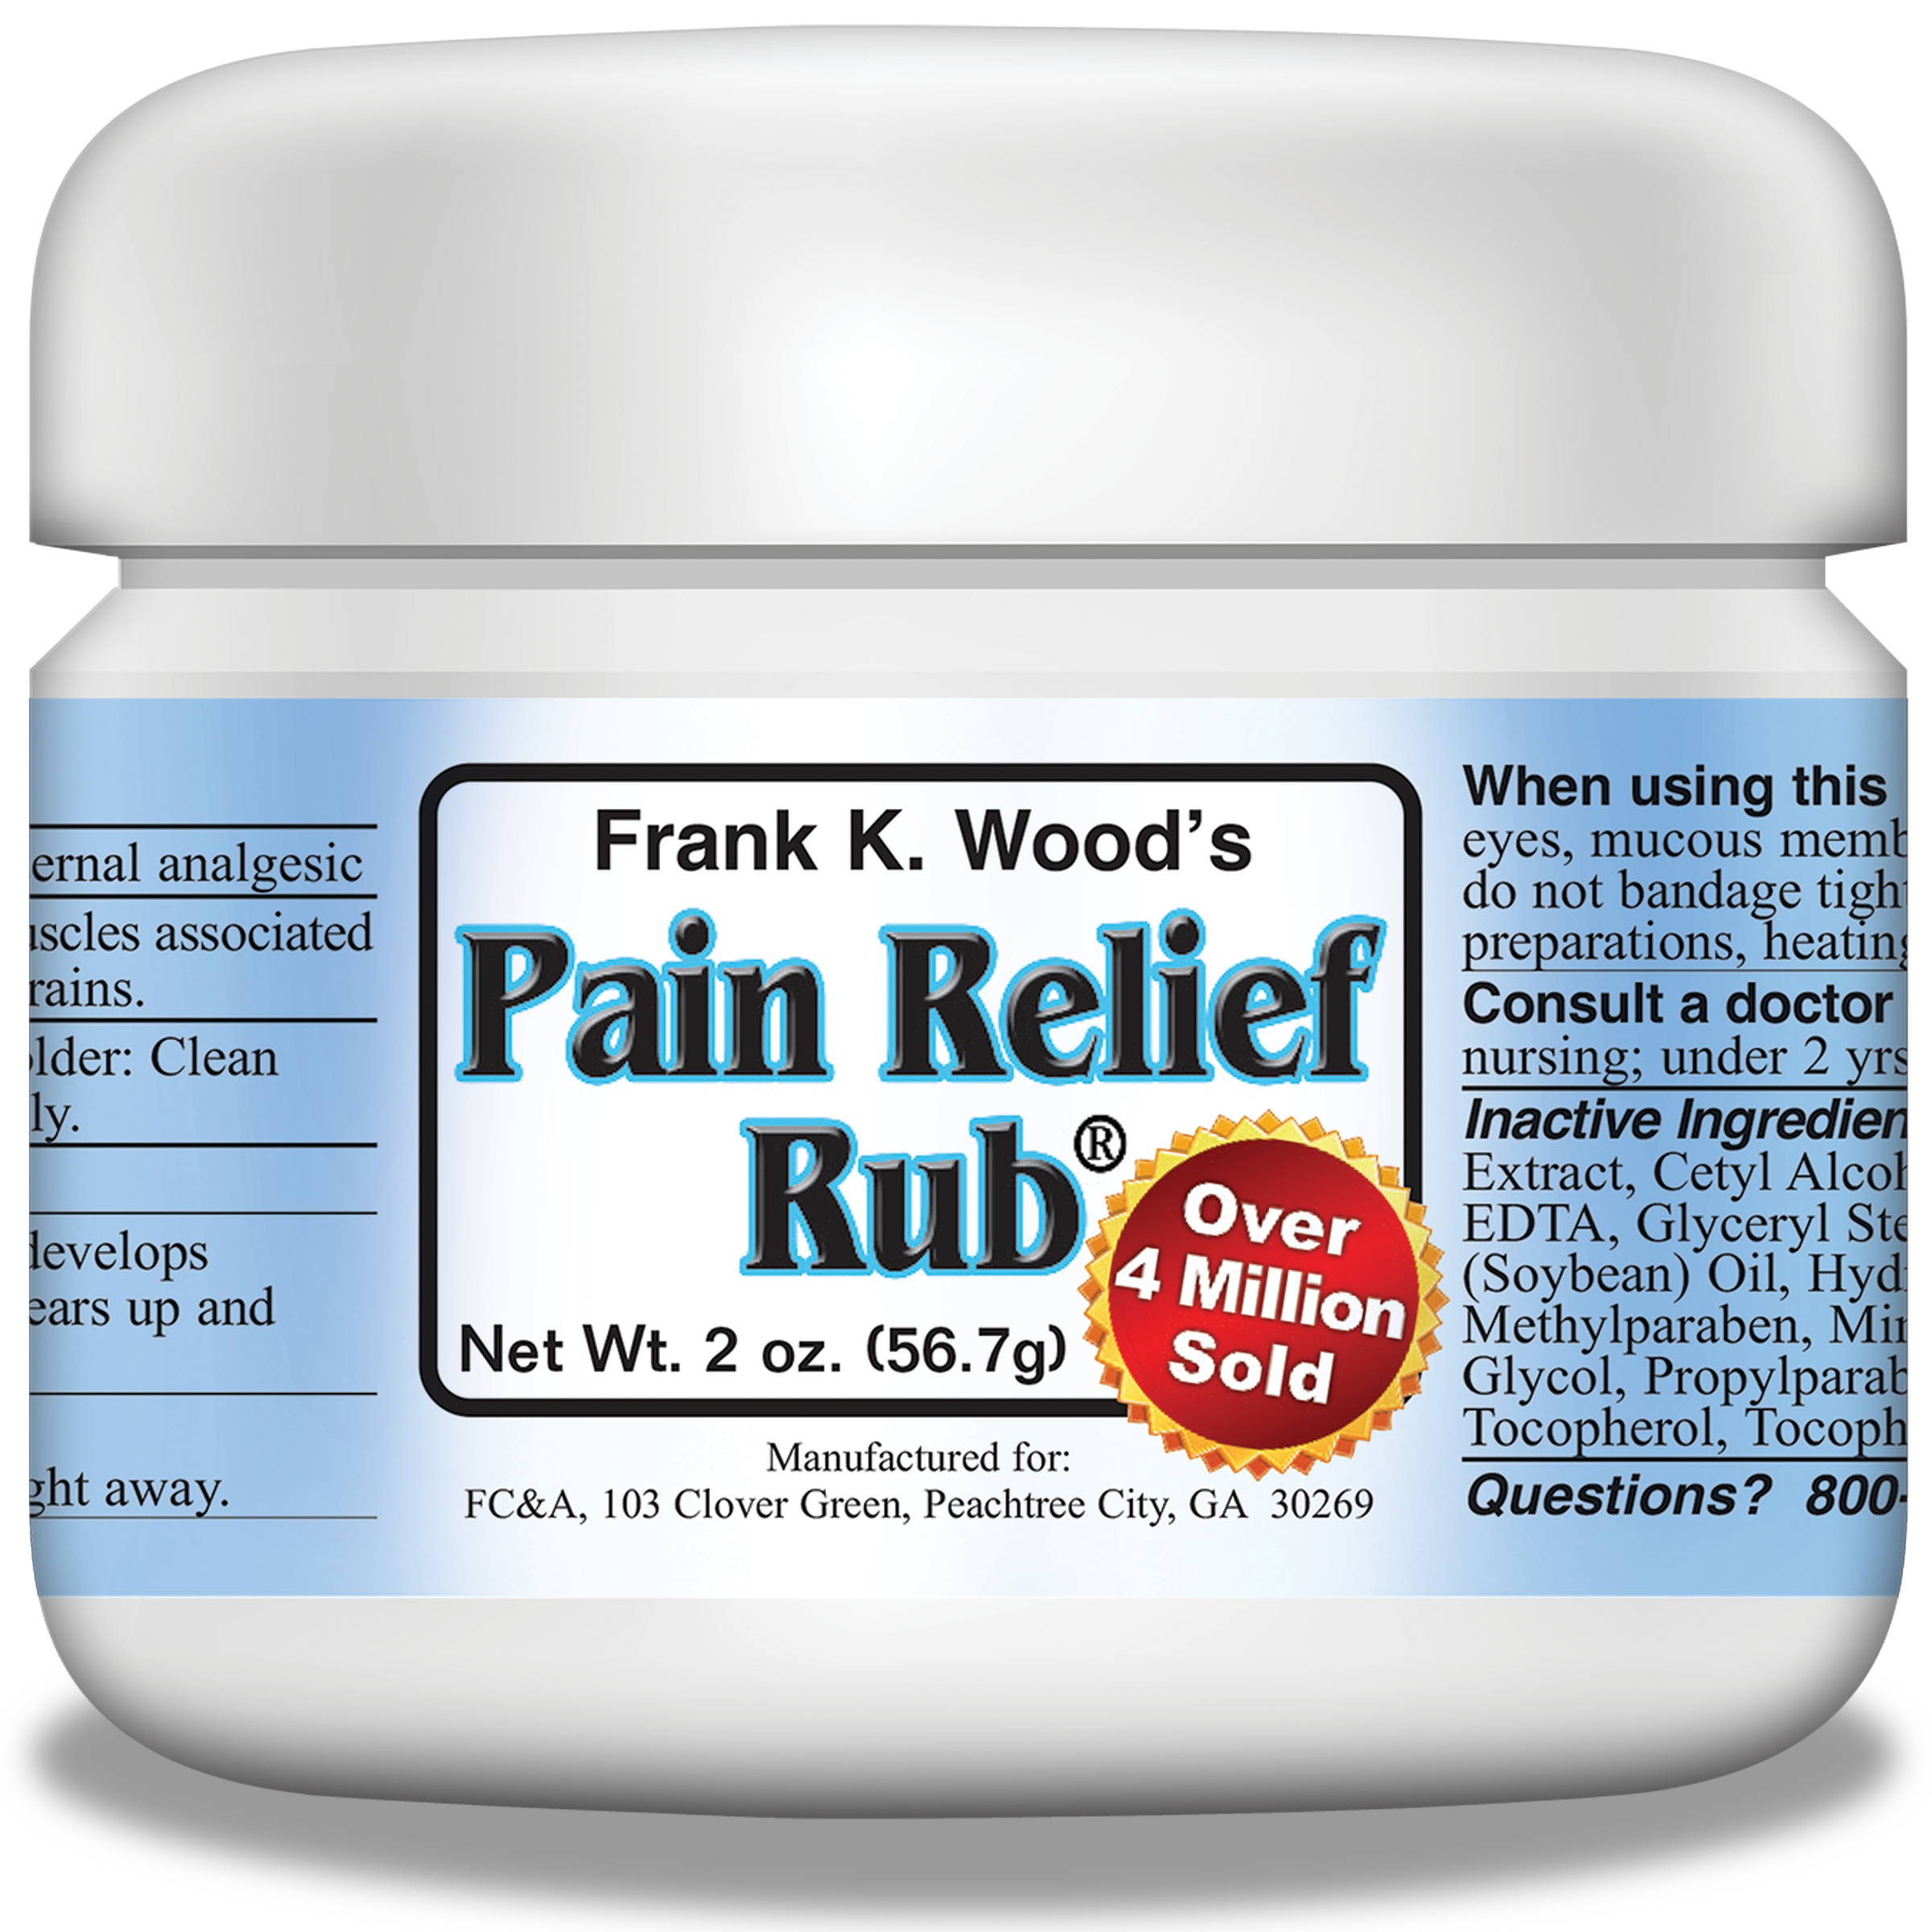 Frank K. Wood's Pain Relief Rub jar. 